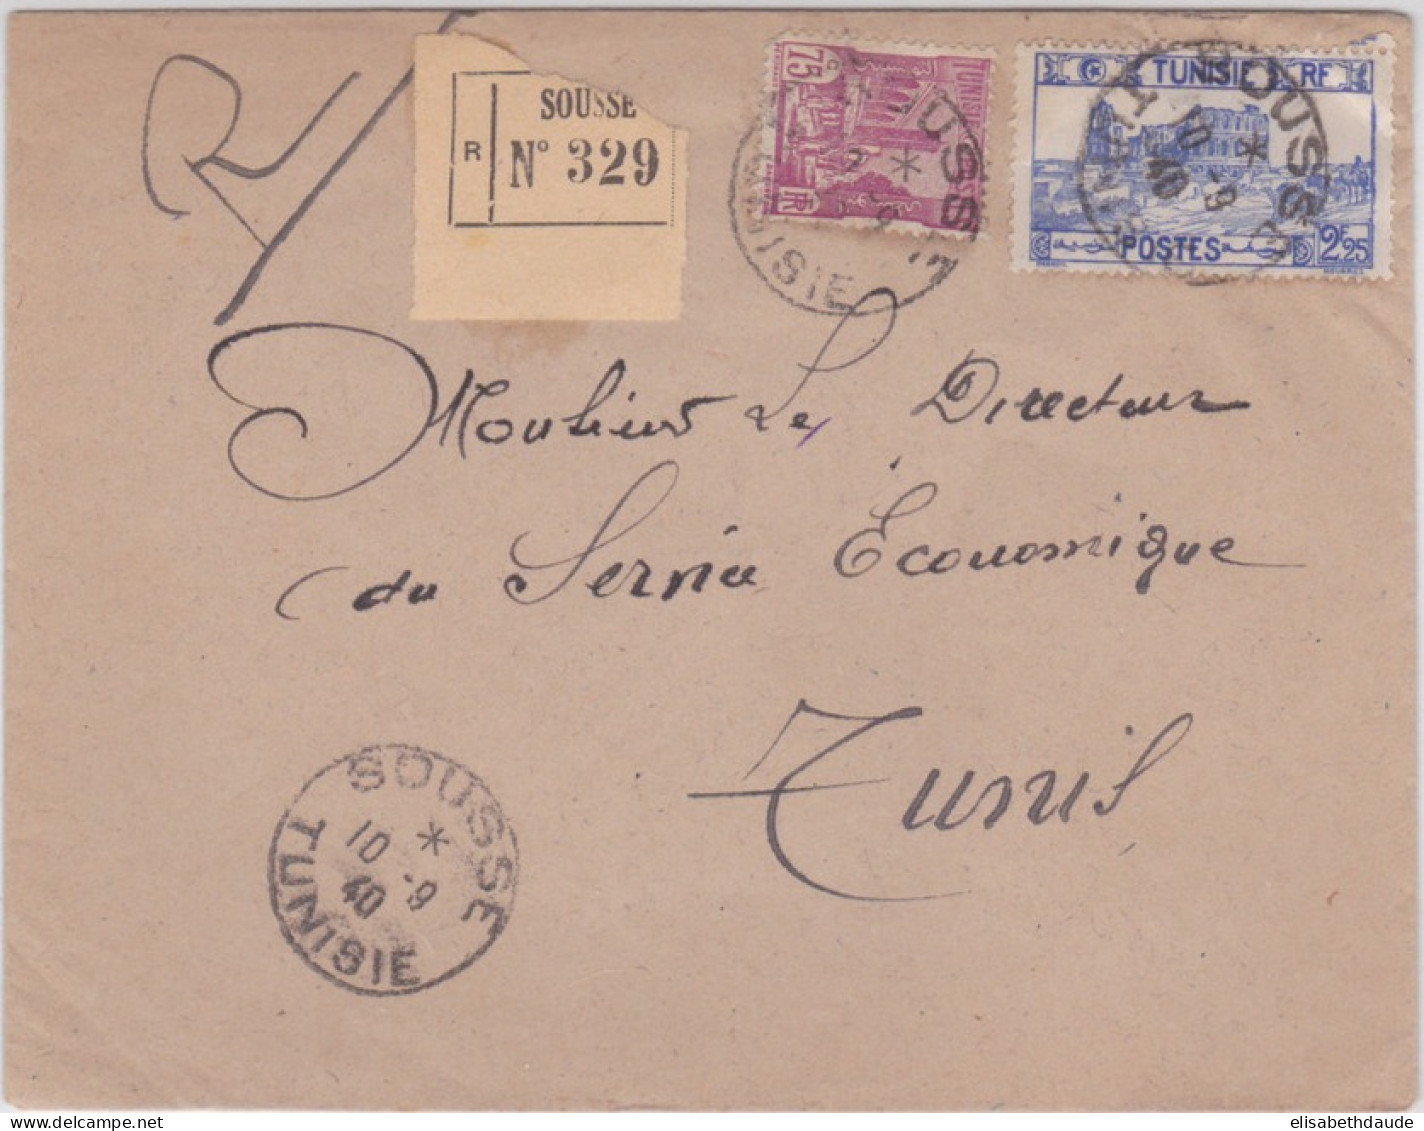 TUNISIE - 1940 - ENVELOPPE RECOMMANDEE De SOUSSE Pour TUNIS - Briefe U. Dokumente